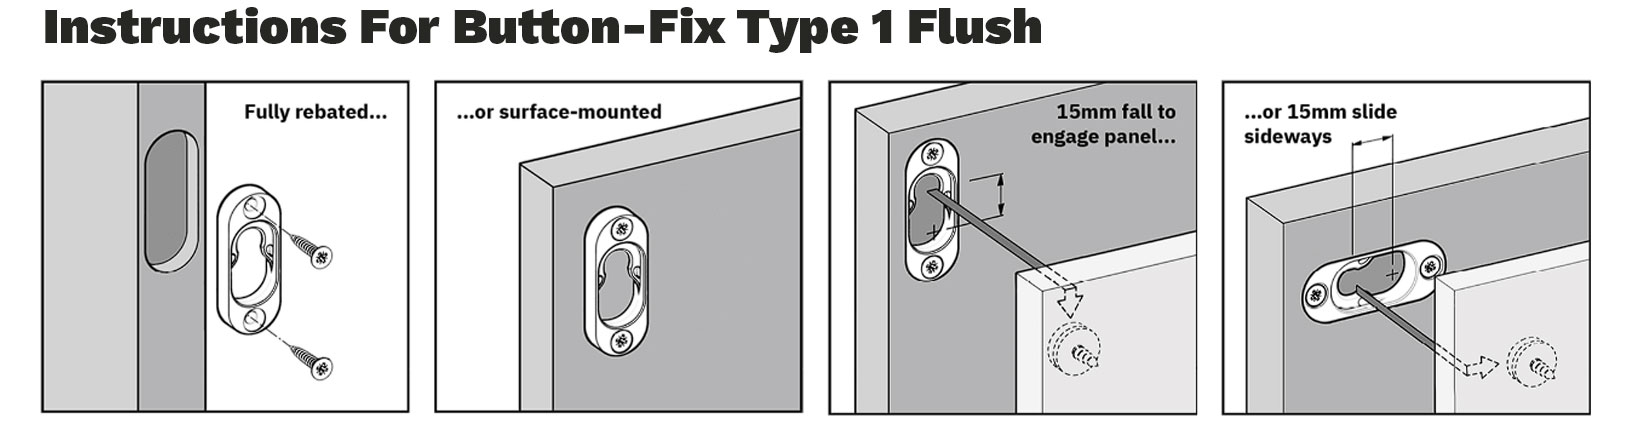 Flush Fitting Instructions